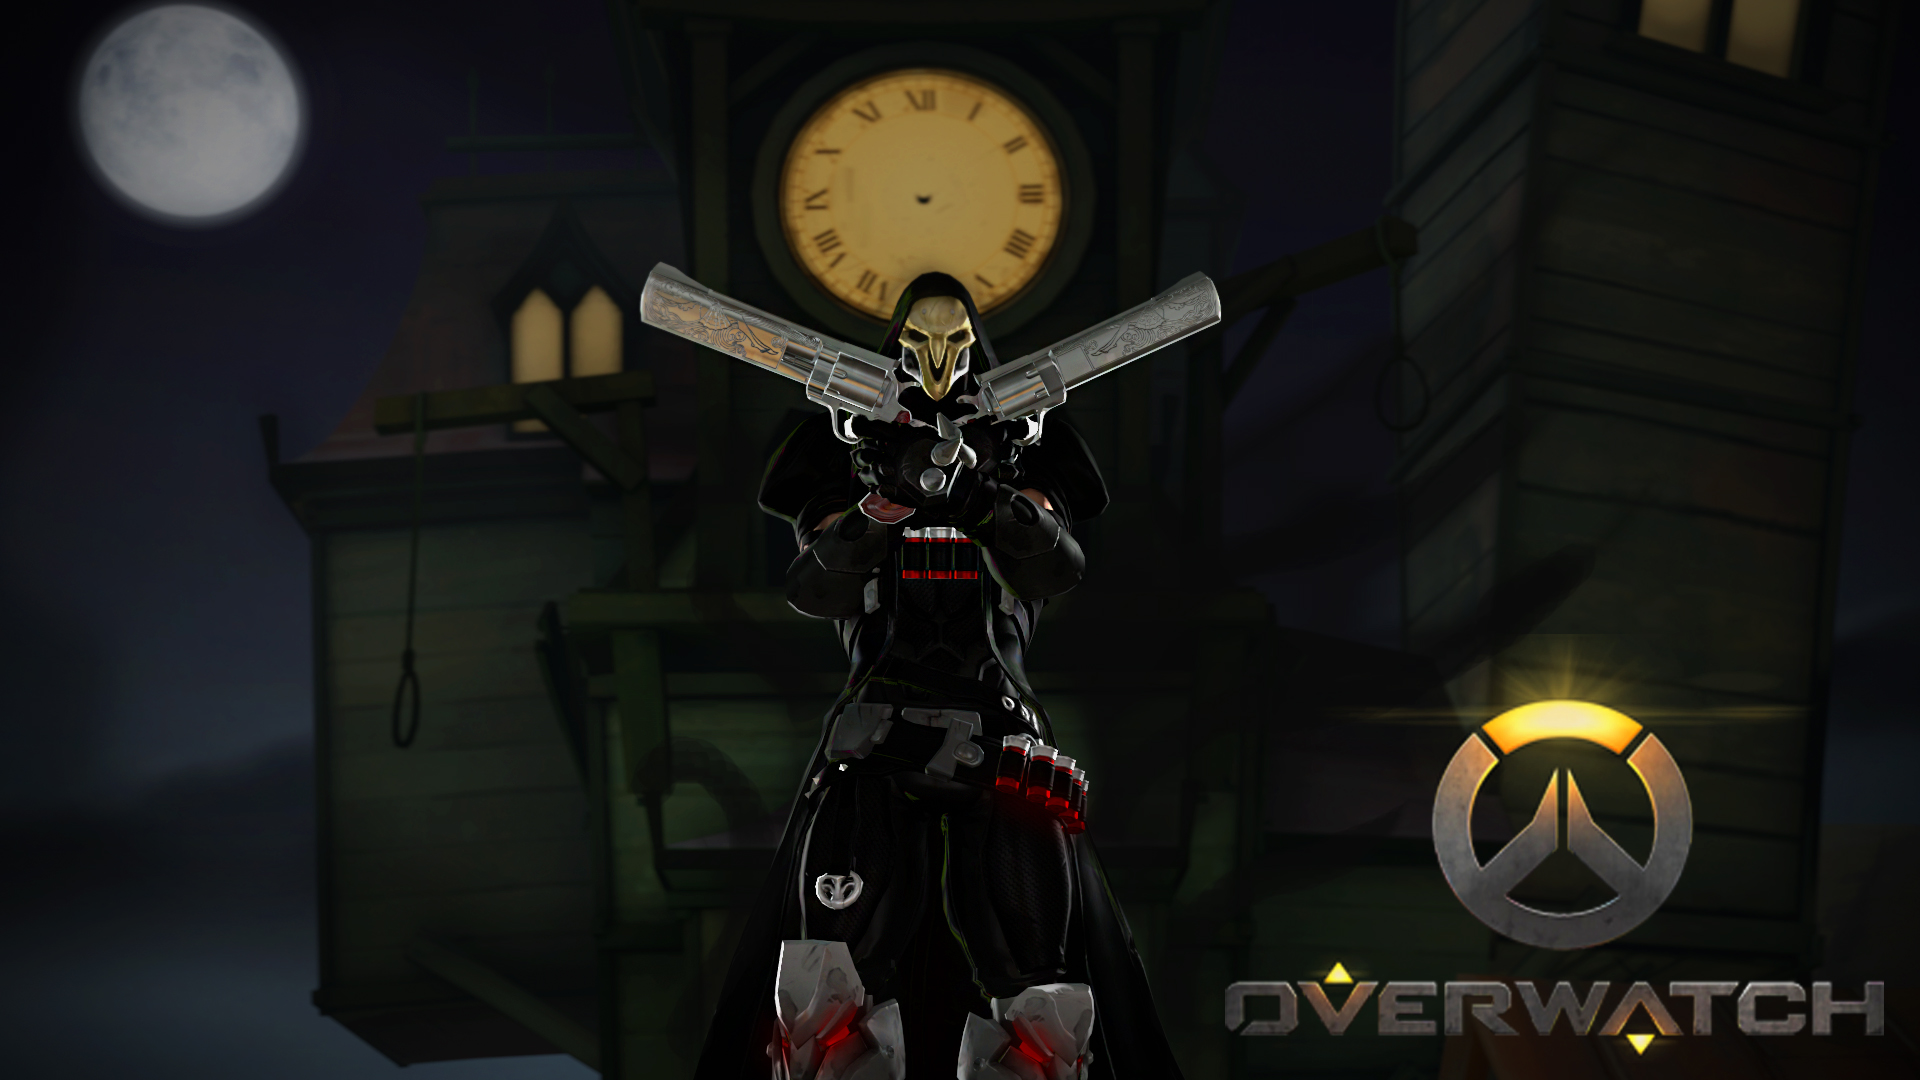 Overwatch Reaper Wallpaper By Darknessringogallery On